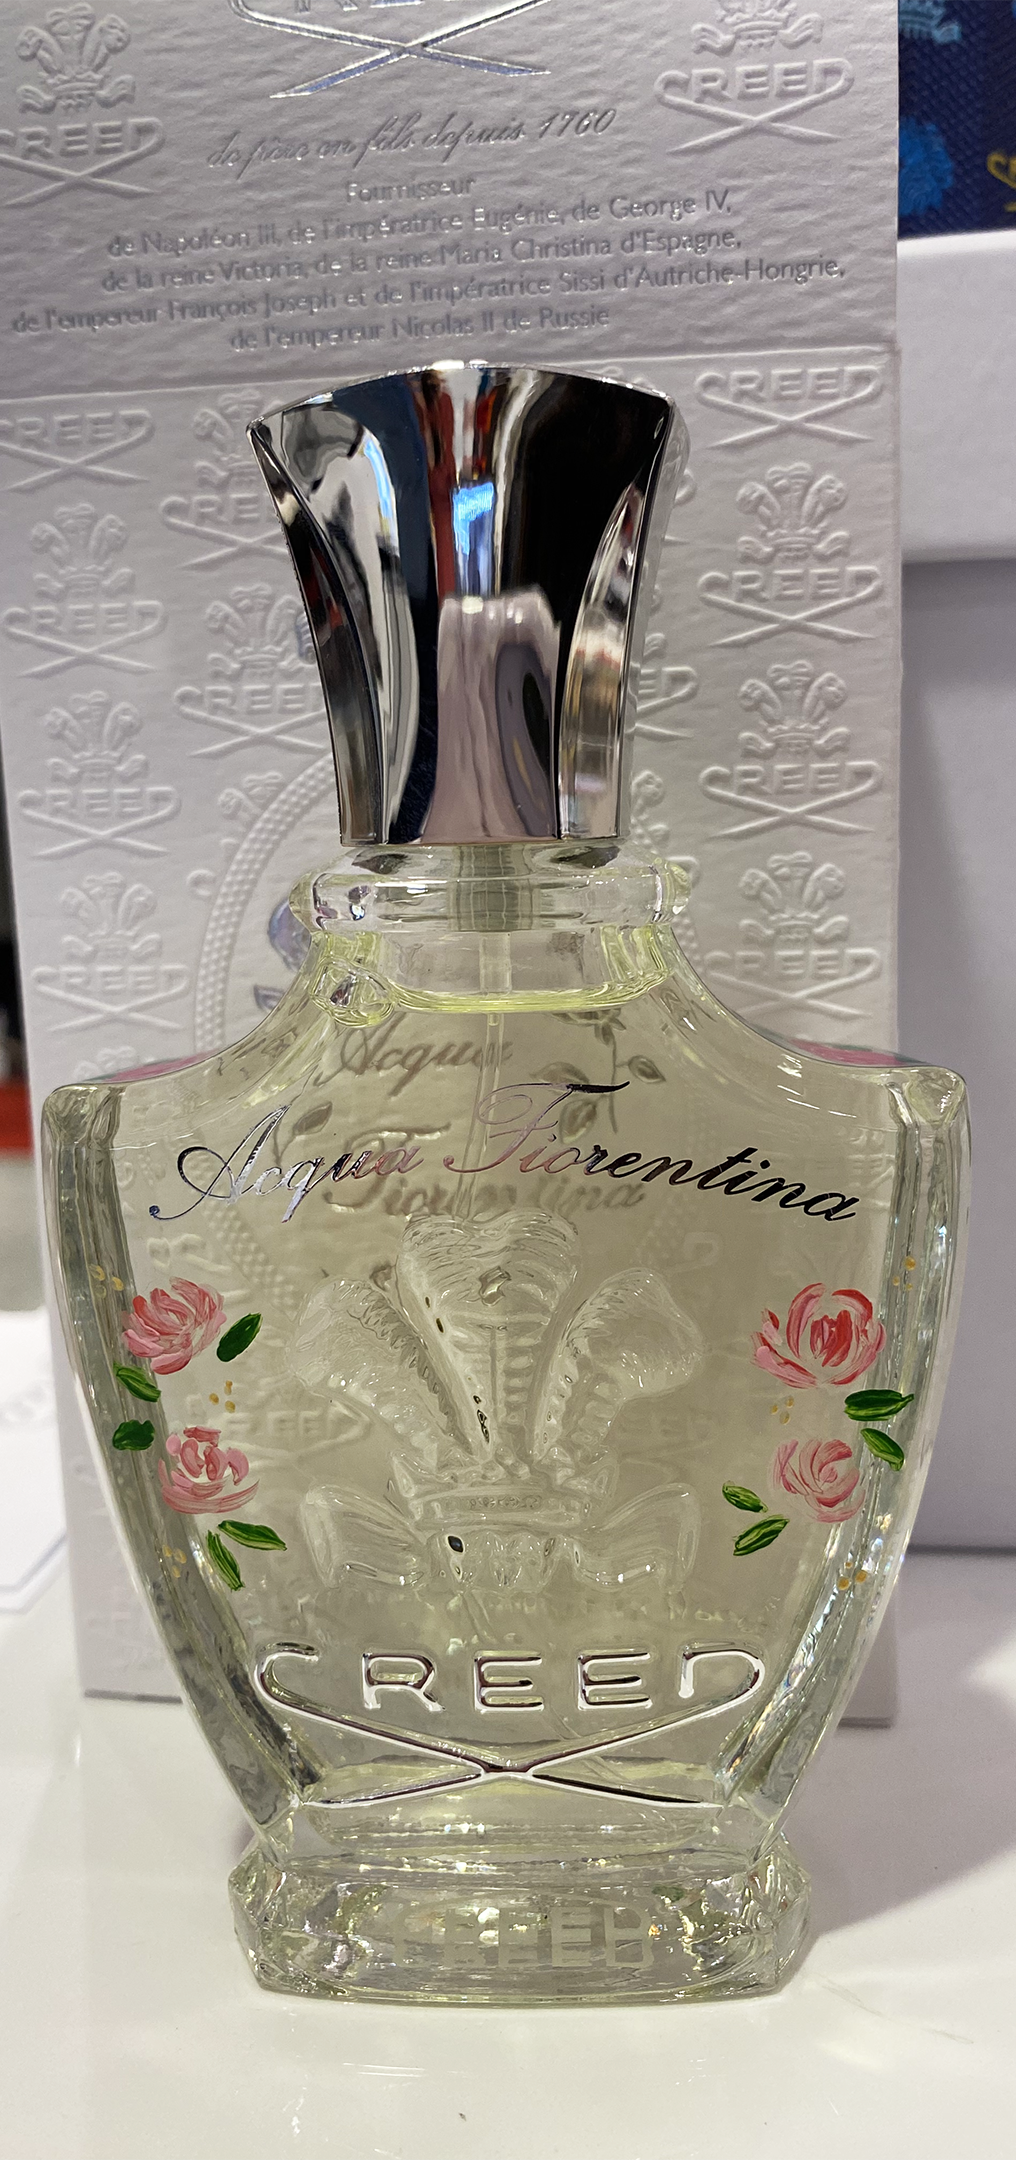 Los Angeles Bottle Painting Creed Acqua Fiorentina Fragrance Neiman Marcus Brand Activation